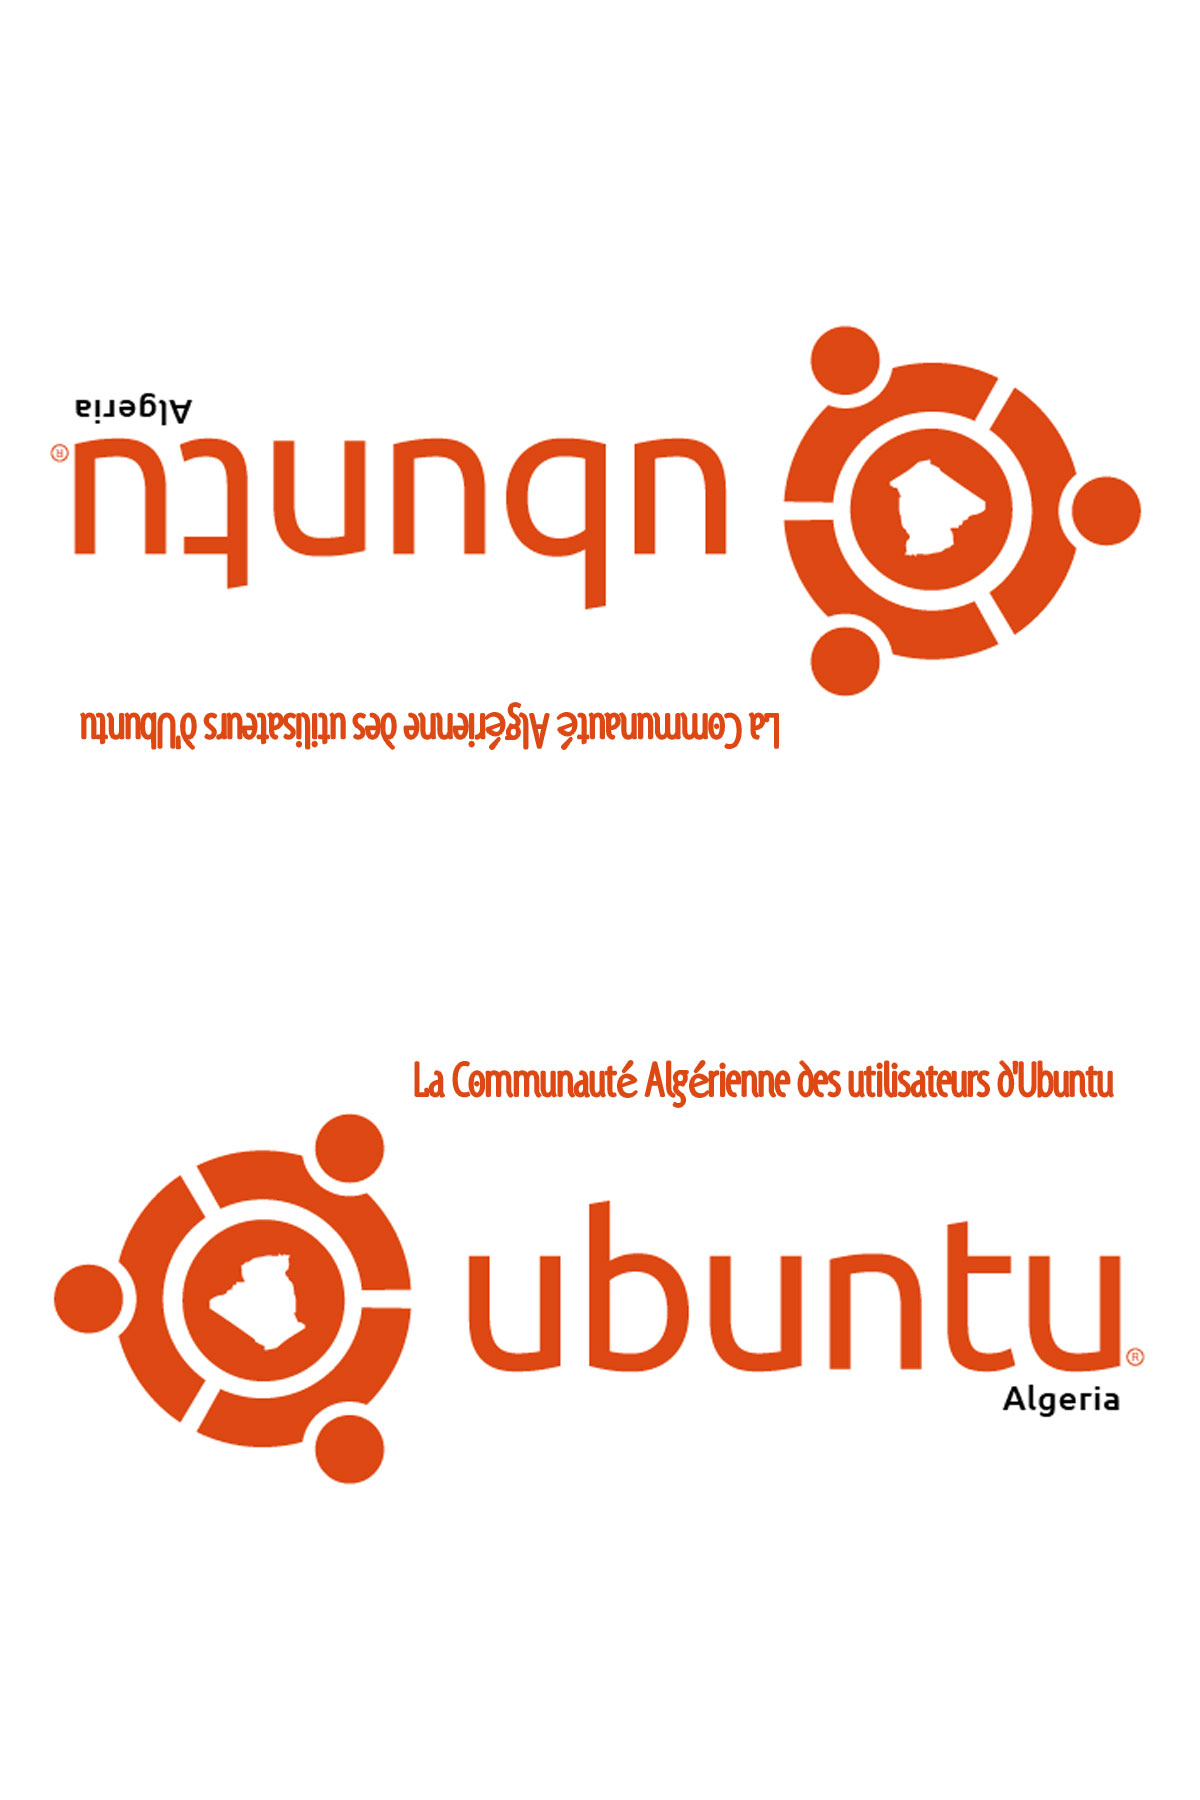 attachment:UbuntuStandUp-algeria.jpg